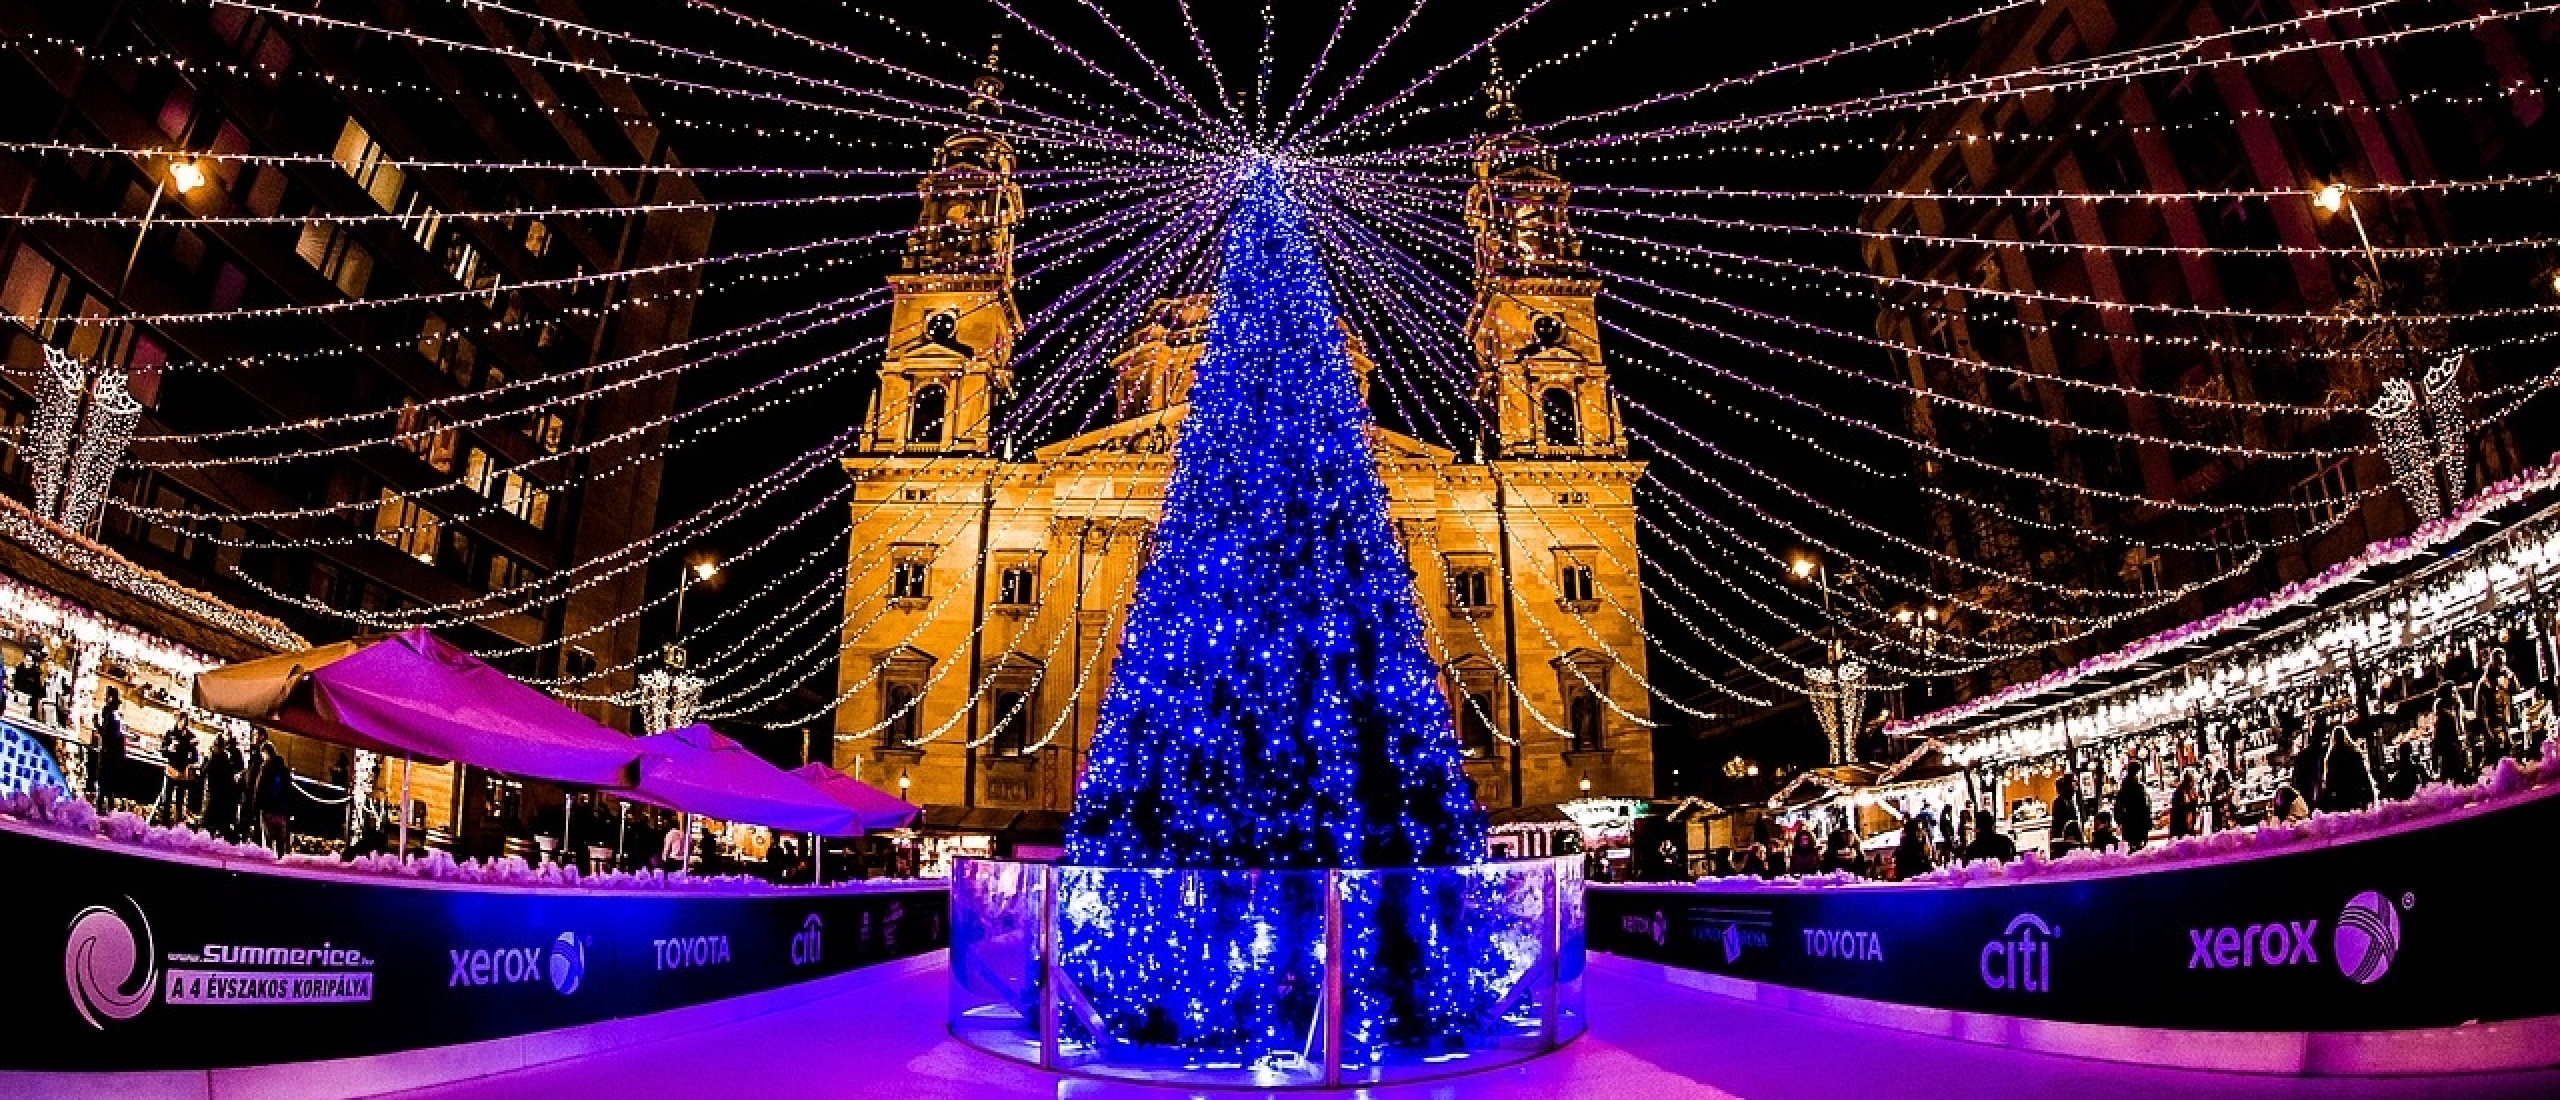 European Best Christmas Destination: Budapest